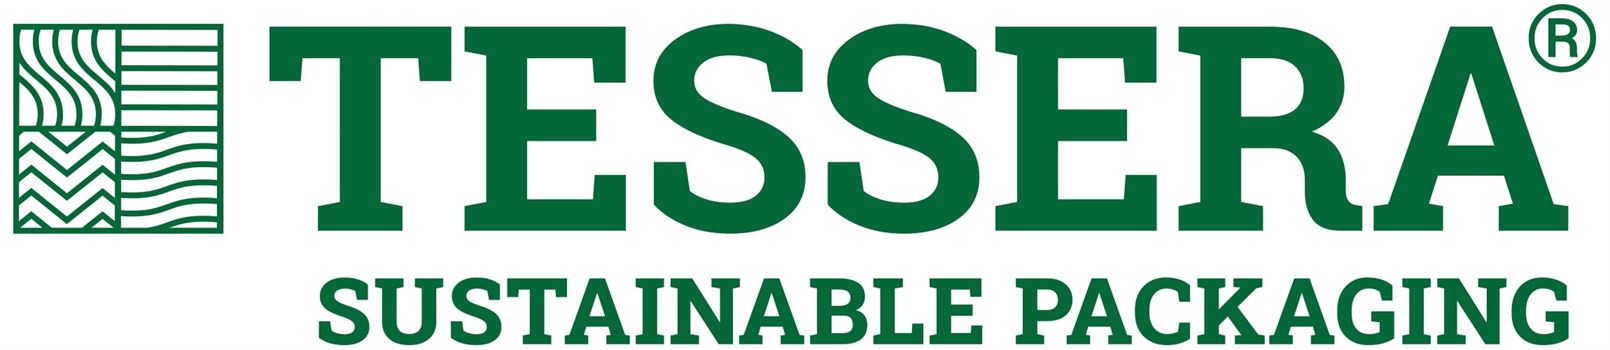 Tessera Sustainable Packaging®